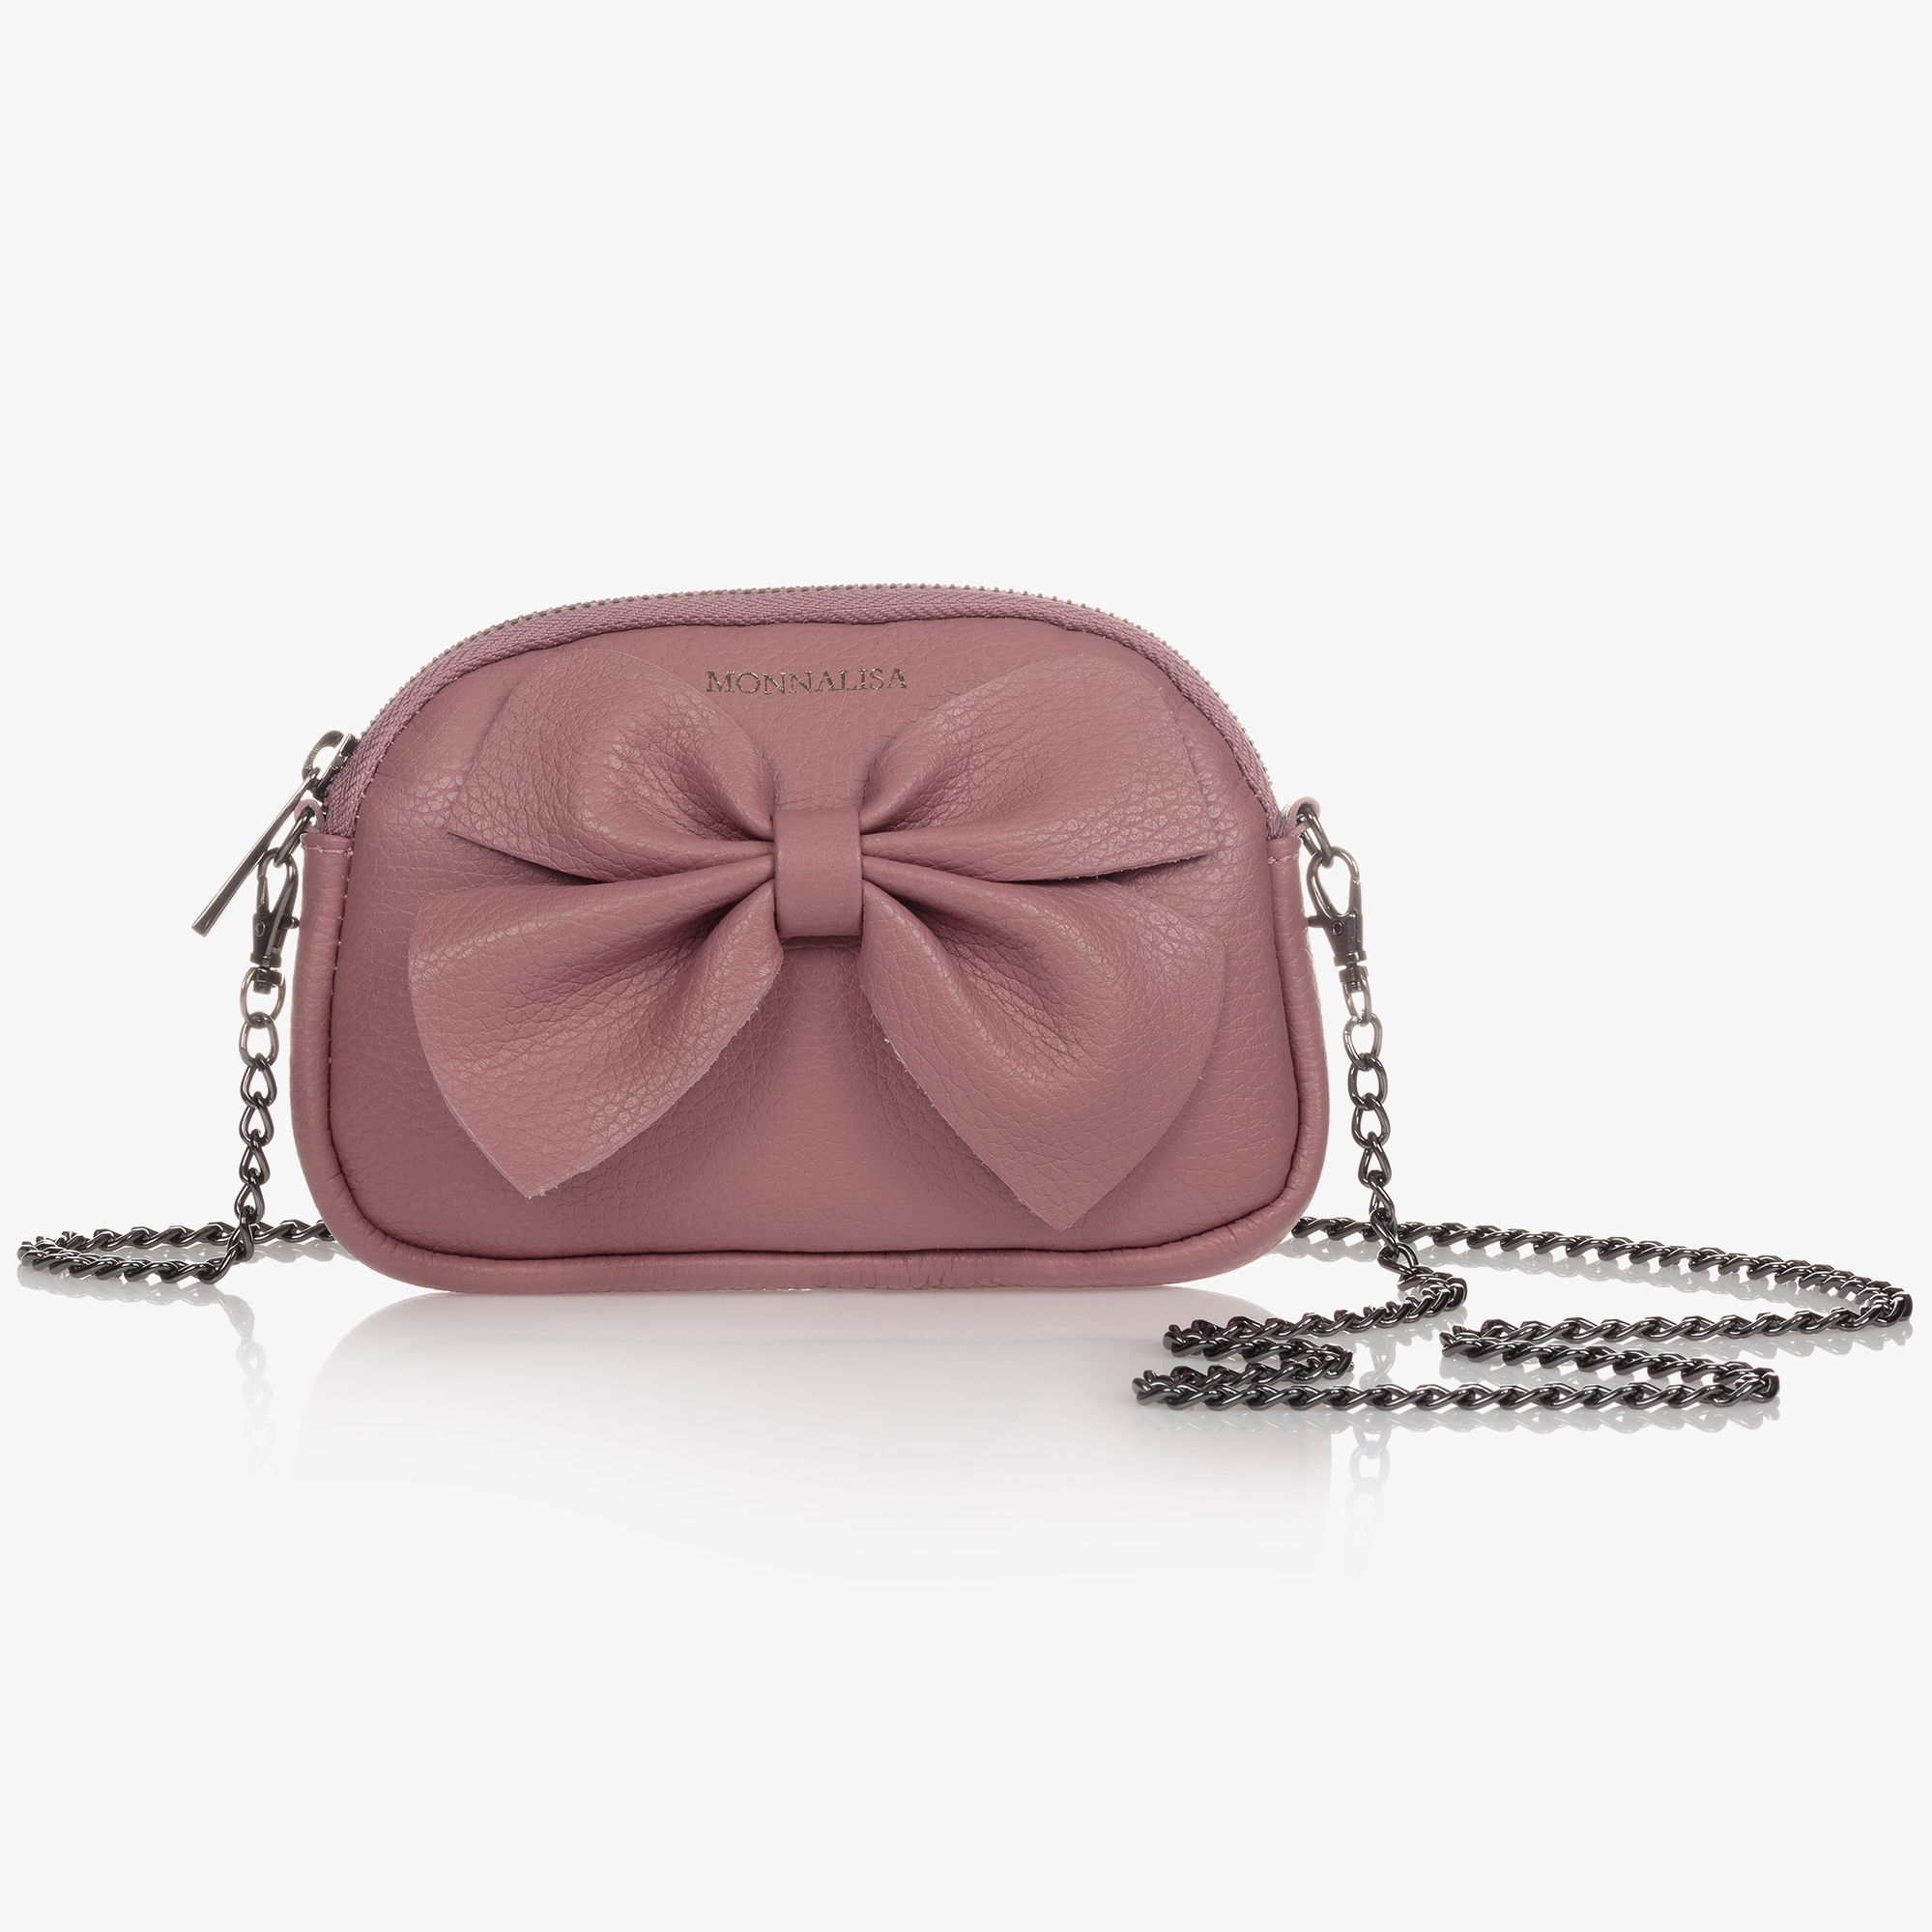 Monnalisa - Pink Leather Bow Bag (18cm)